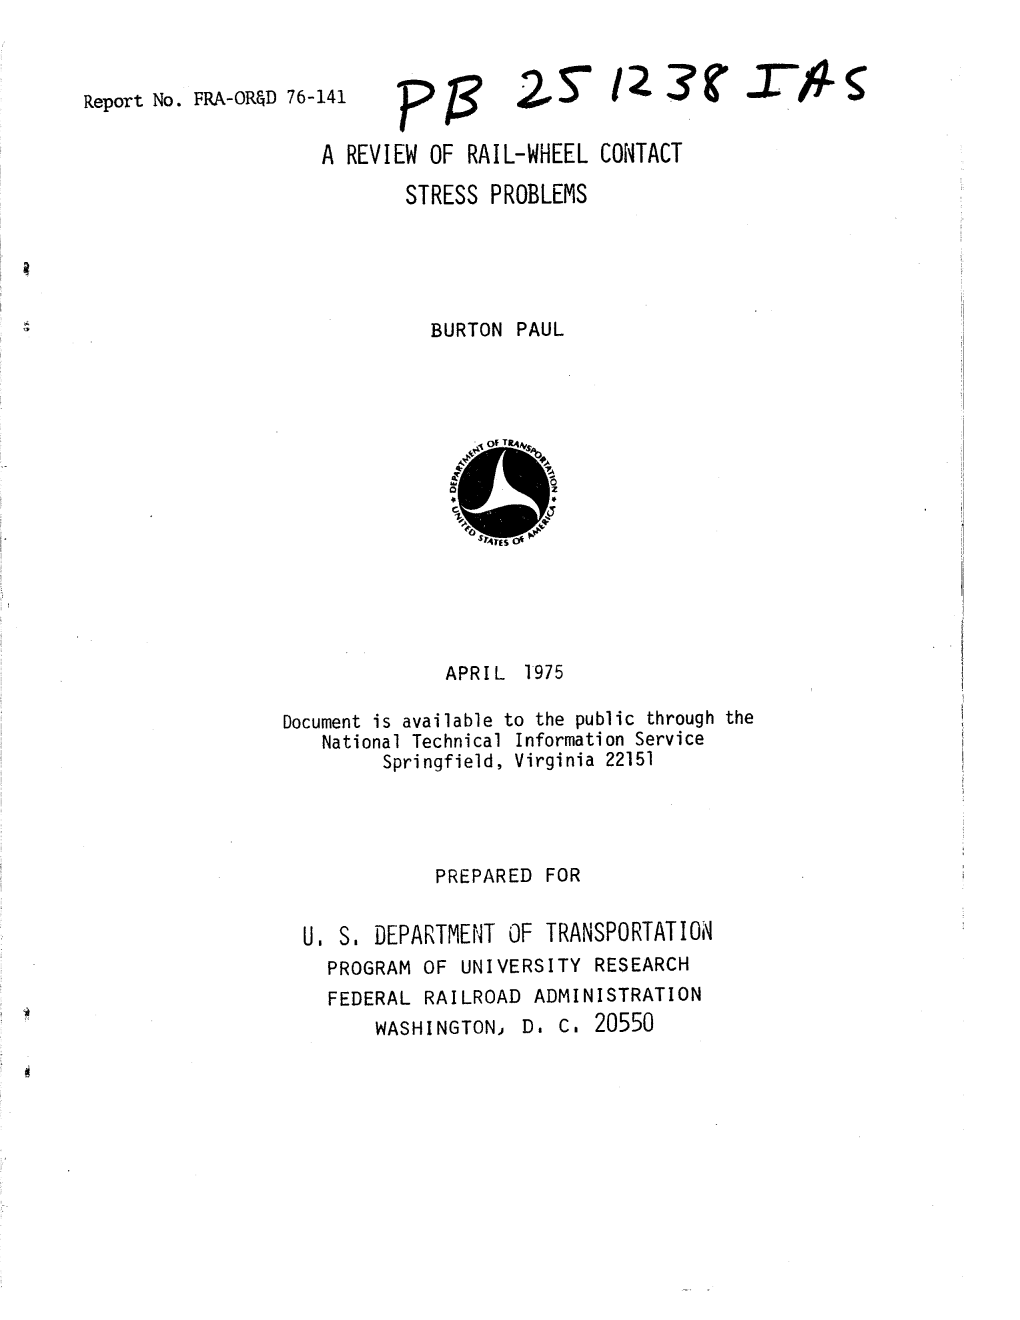 A Review of Rail Wheel Contact Stress Problems Apr 1975.Pdf